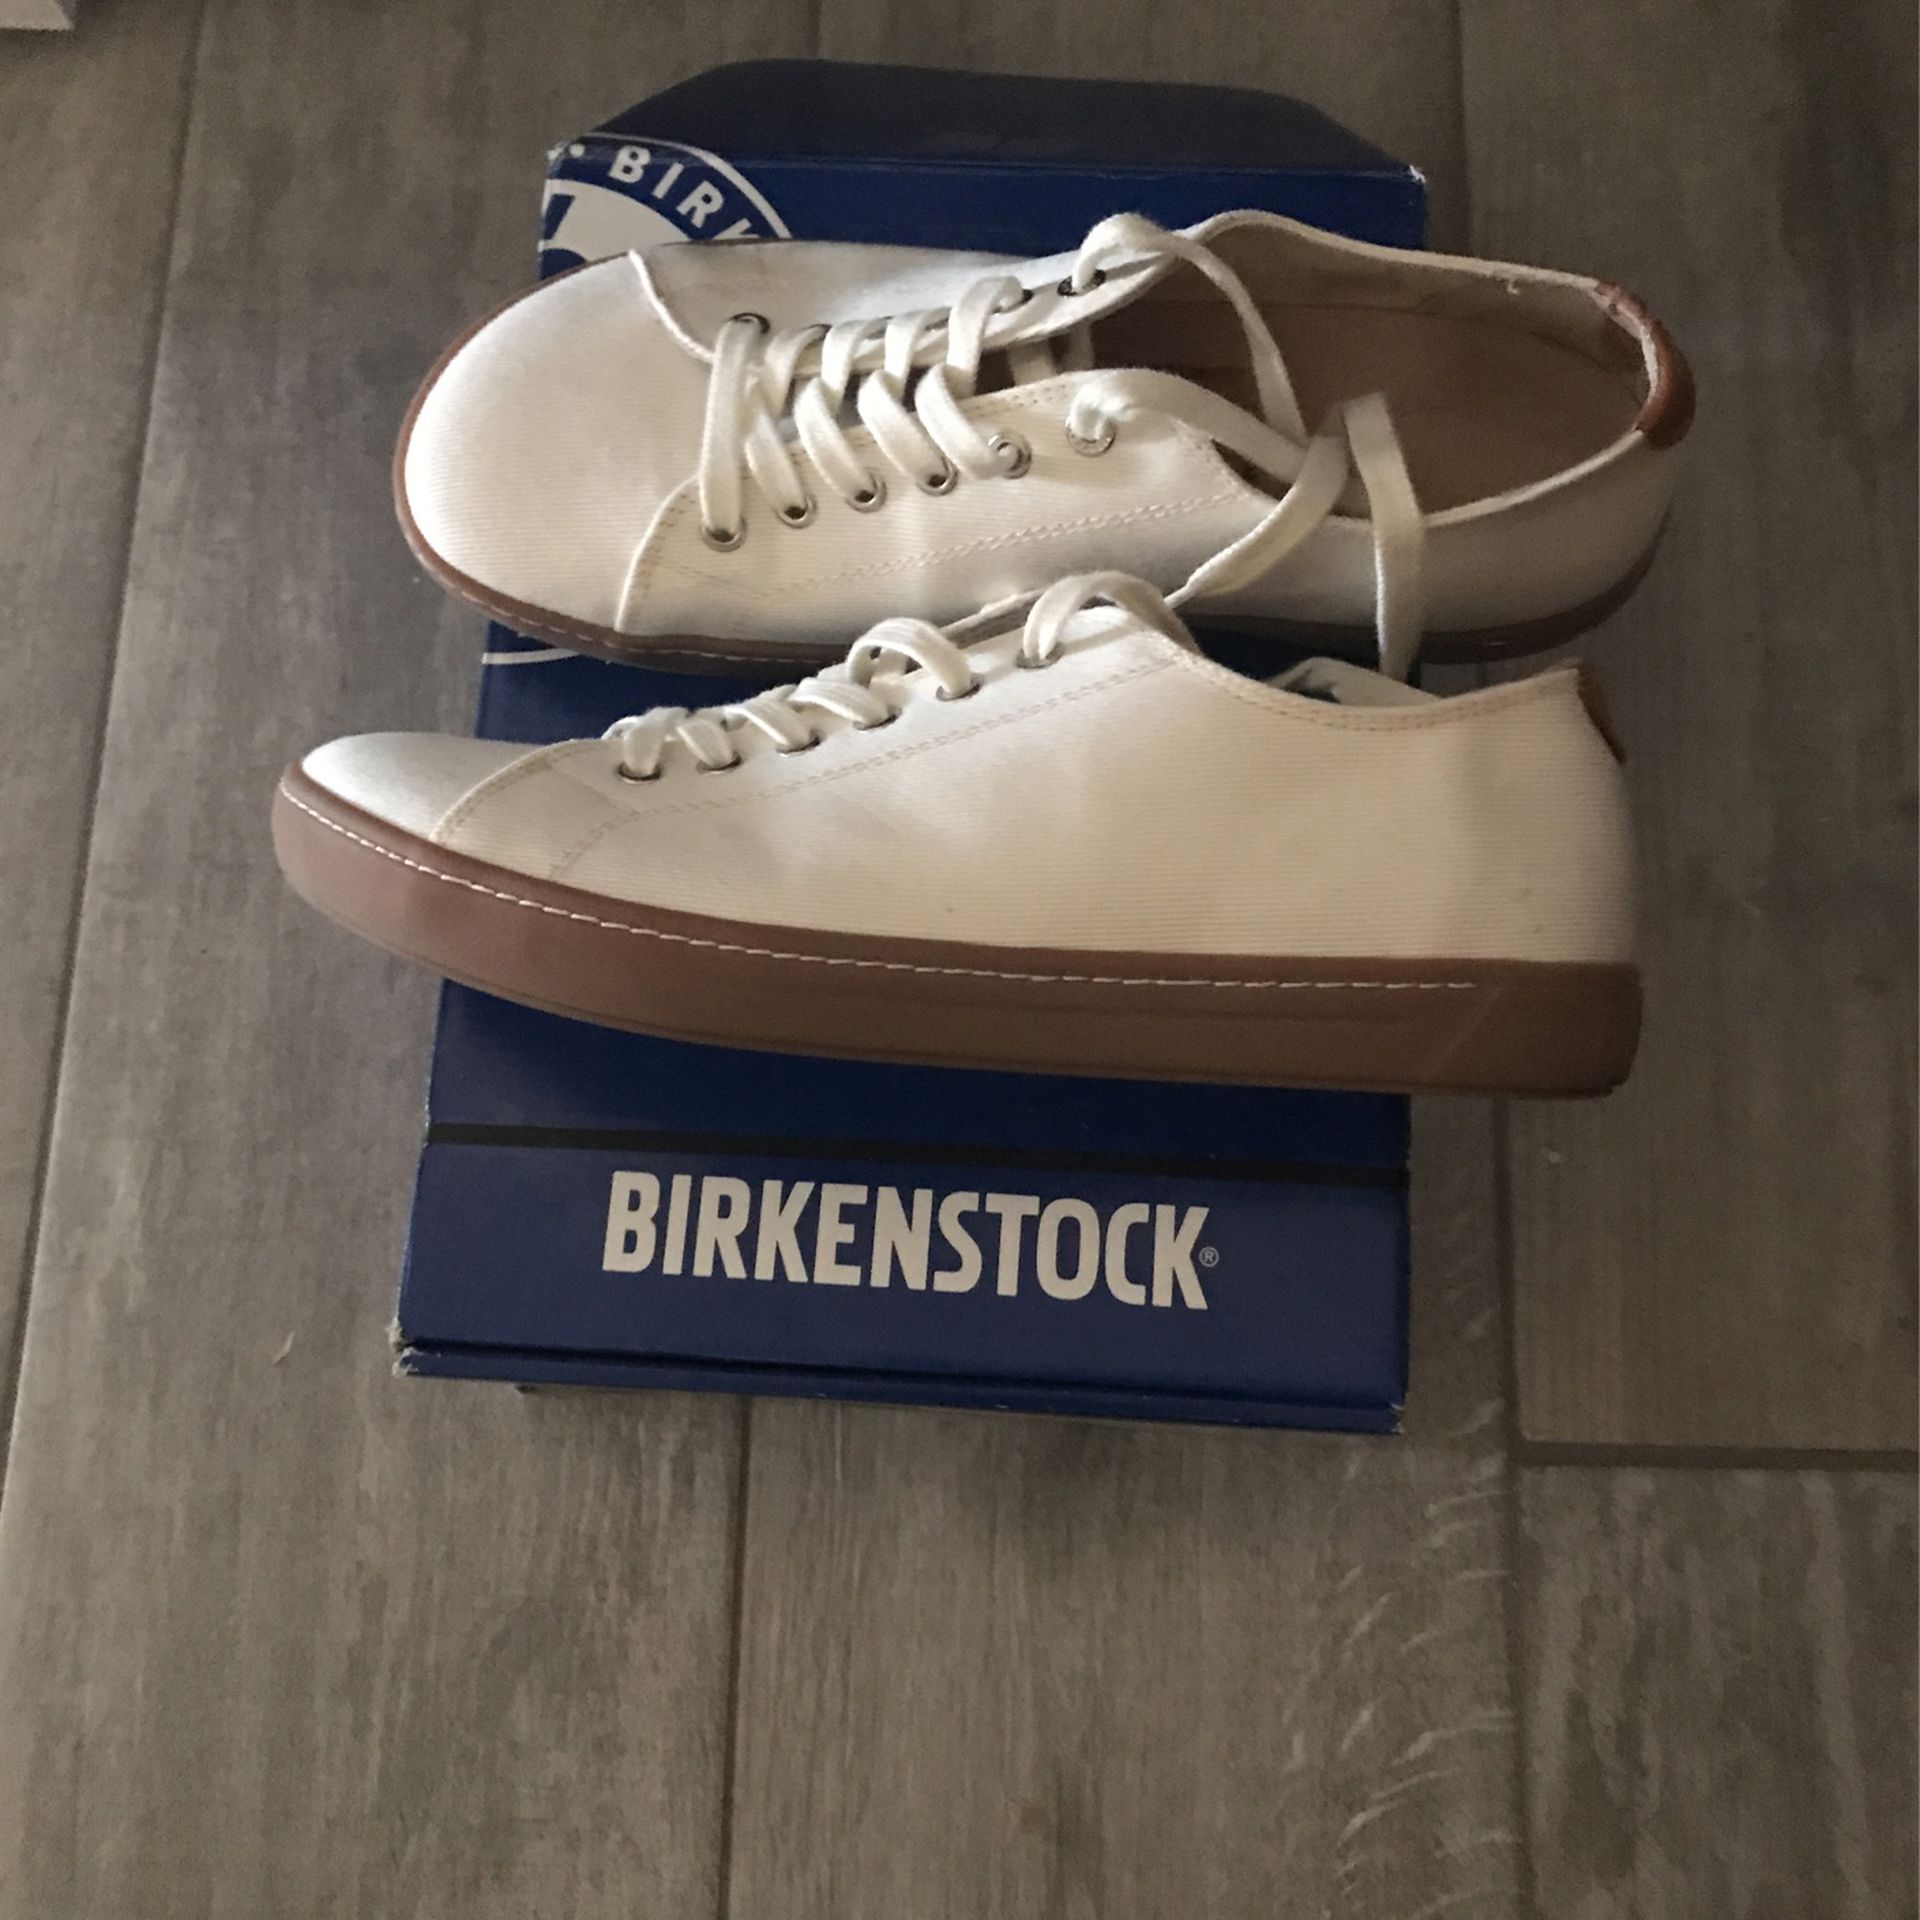 8-81/2  News White BiRKENSTOCK Shoes 